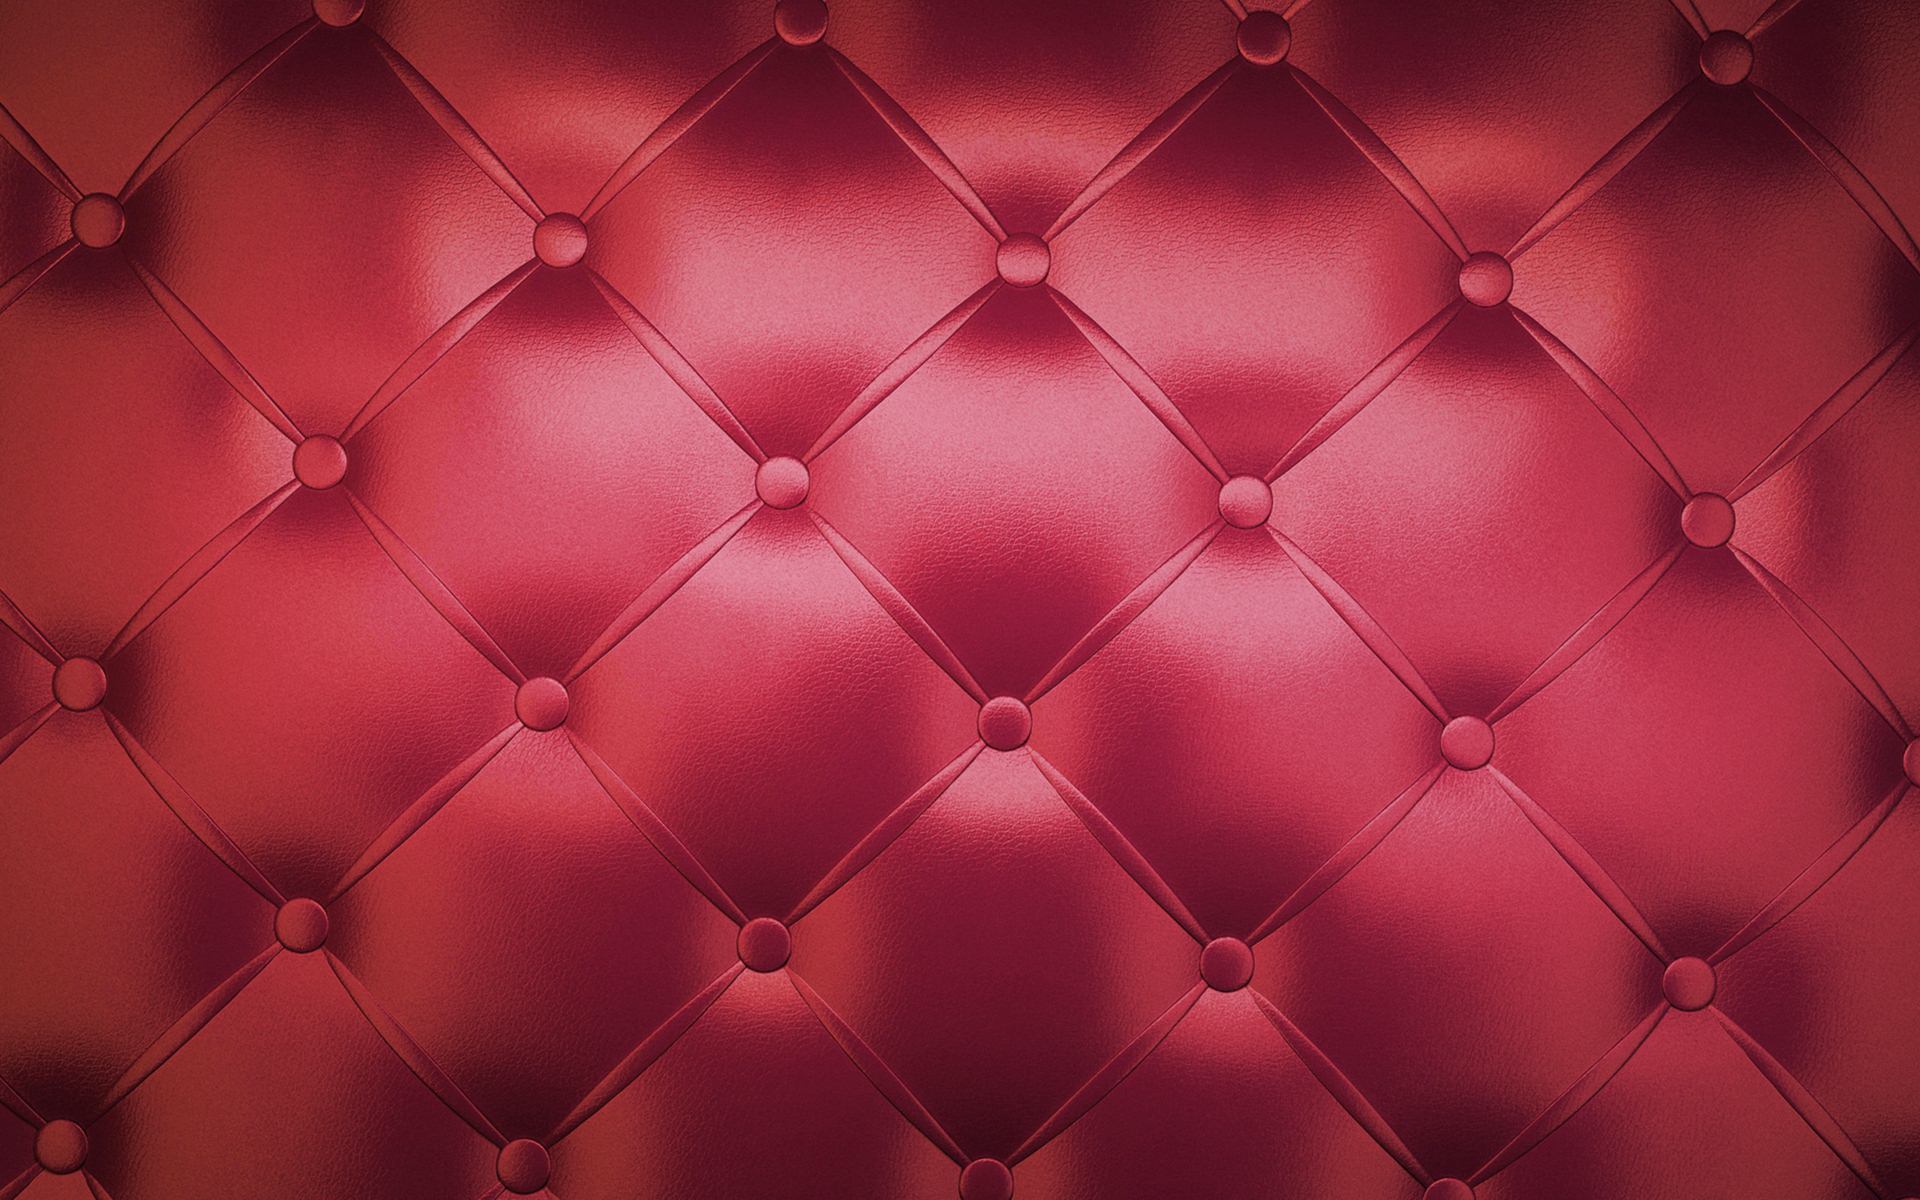 Red Sofa Texture Wallpaper 8857 1920 x 1200